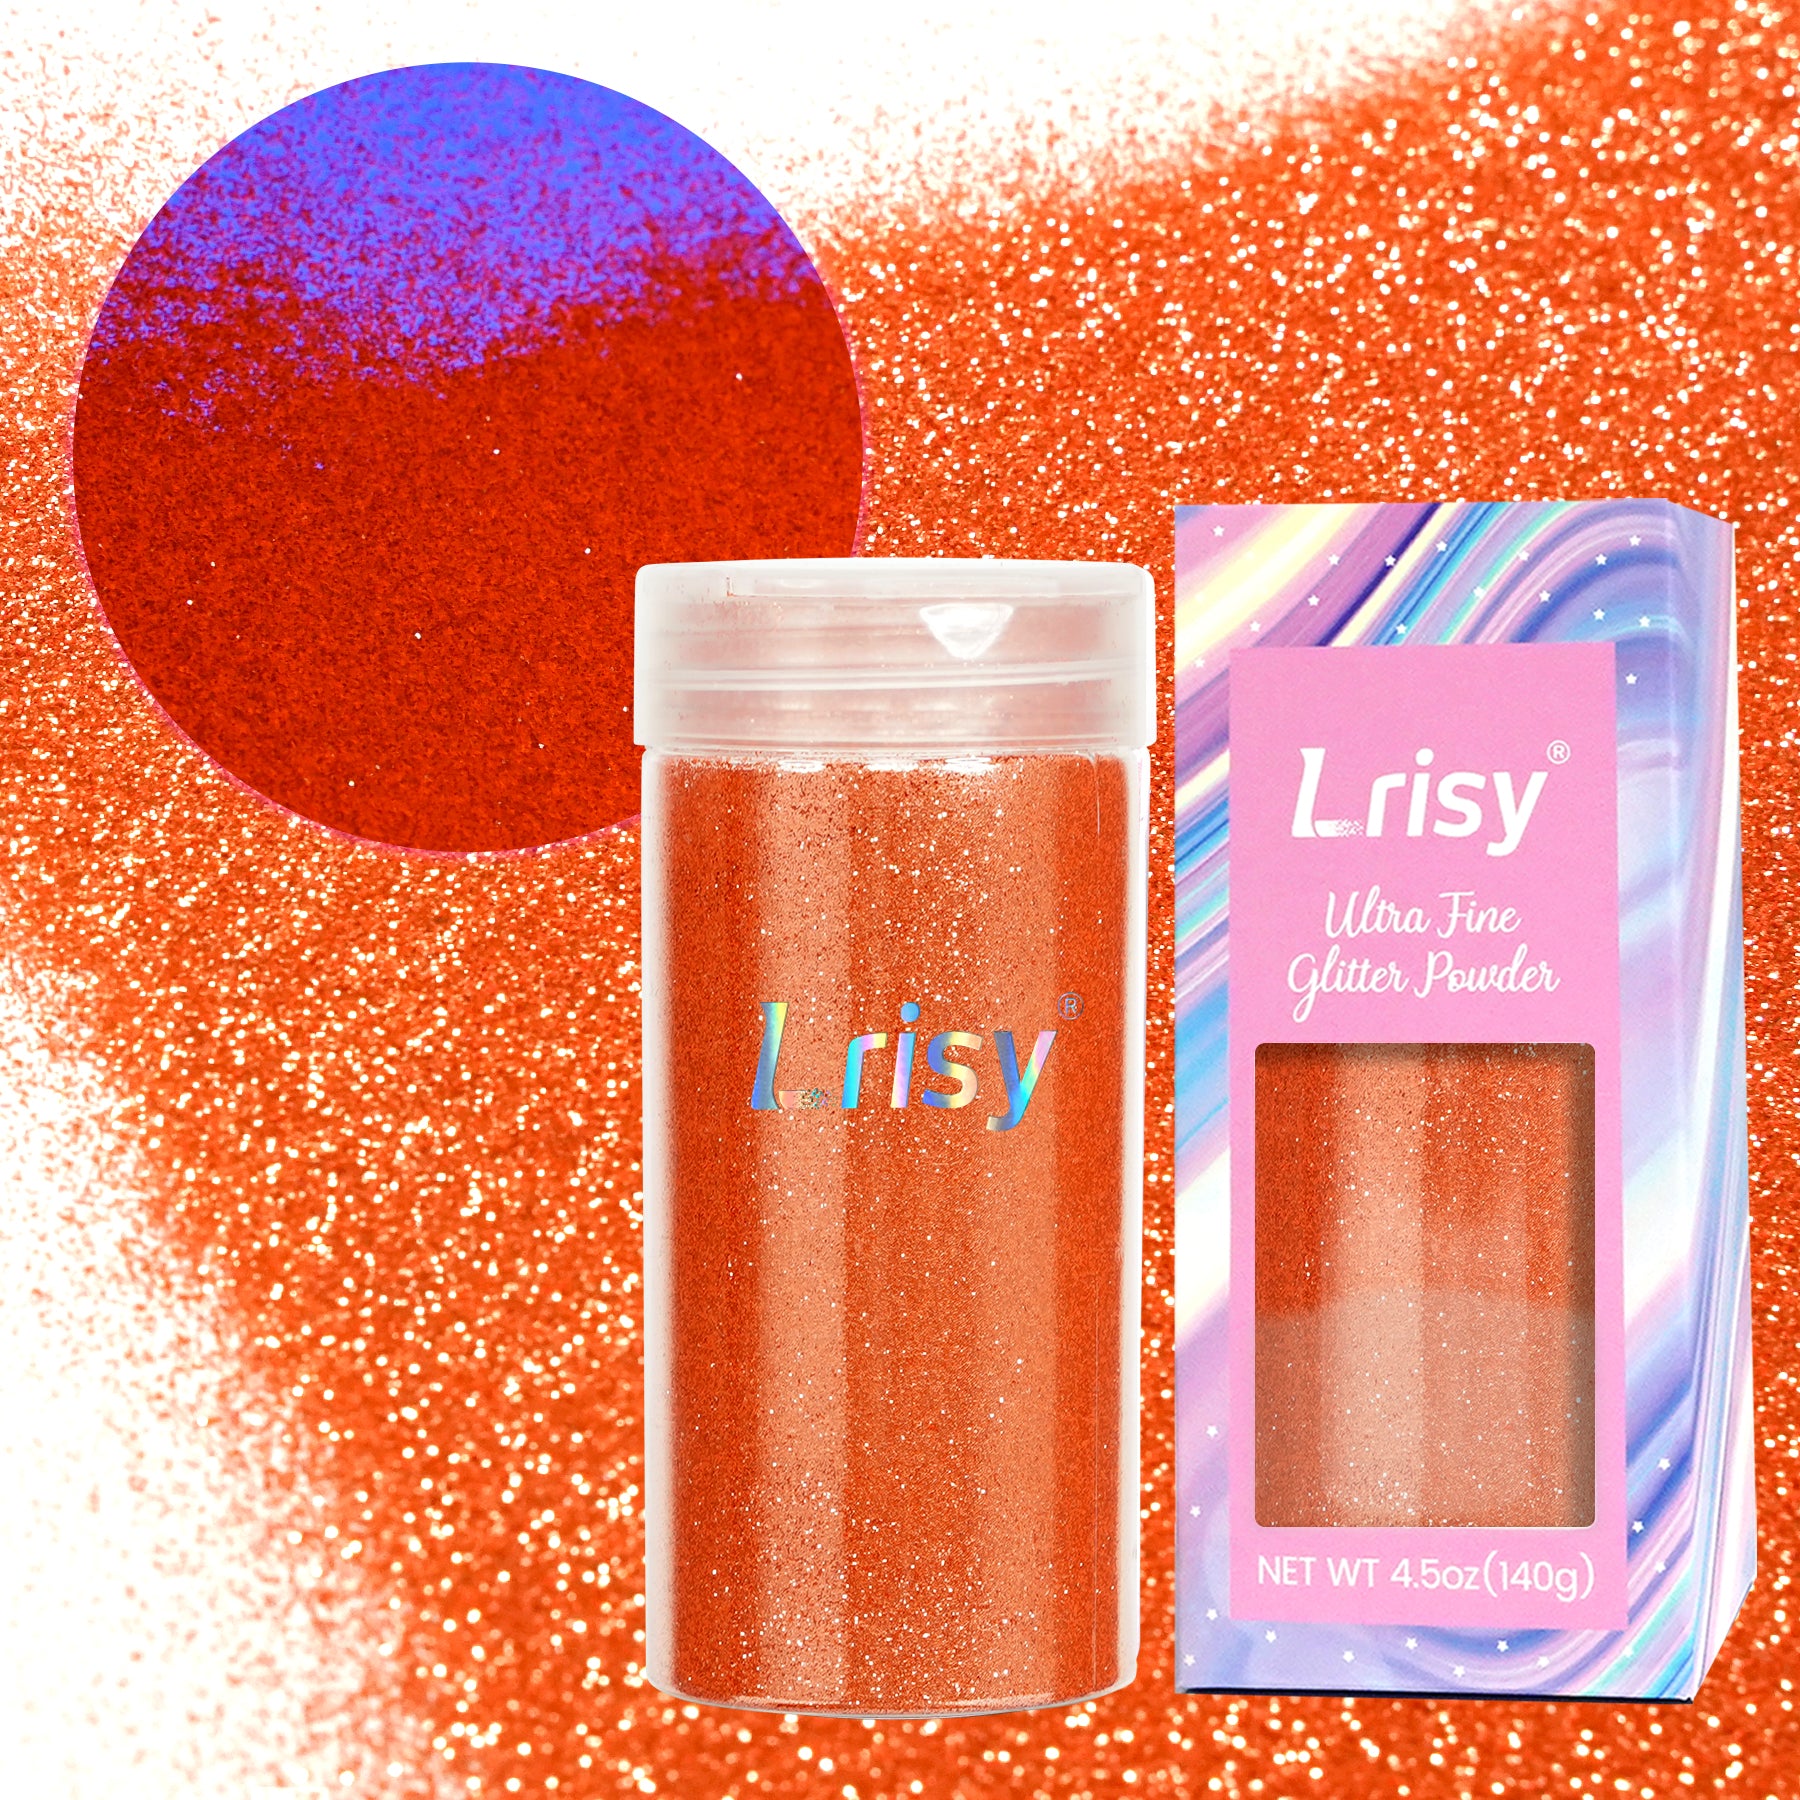 Lrisy Extra Fine Neon Punk Metallic Glitter Powder with Shaker Lid 140g/4.5oz(Punk Orange)